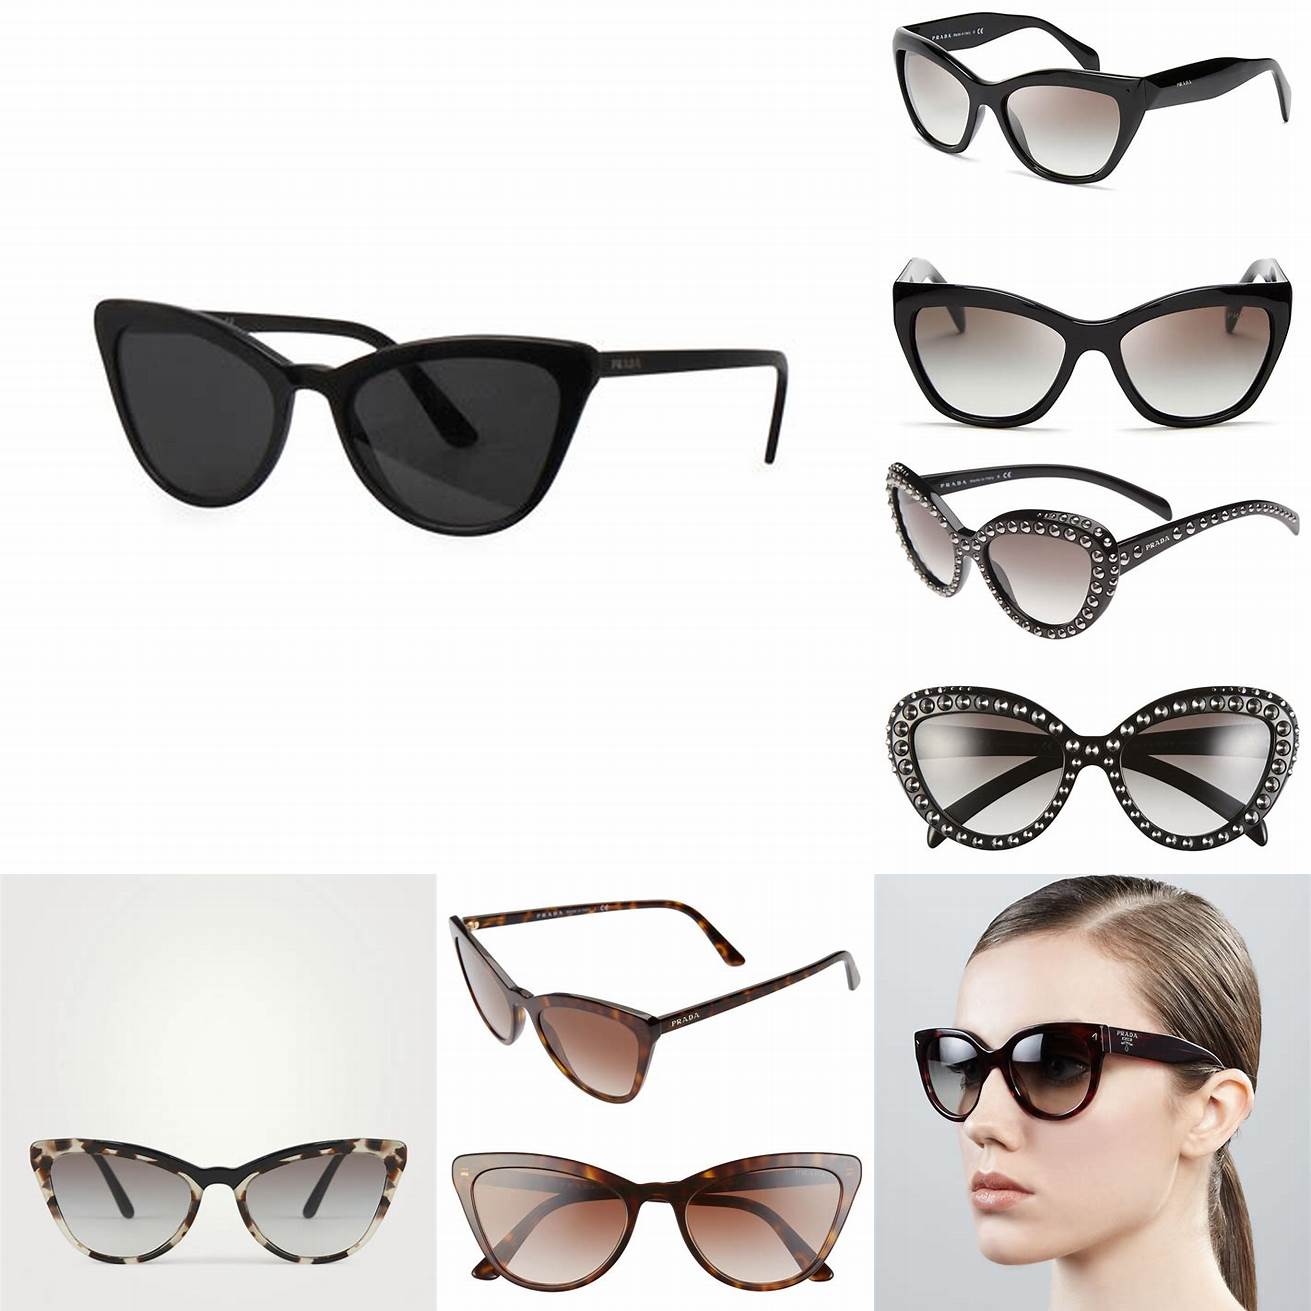 Q Can cat eye Prada sunglasses be worn by men